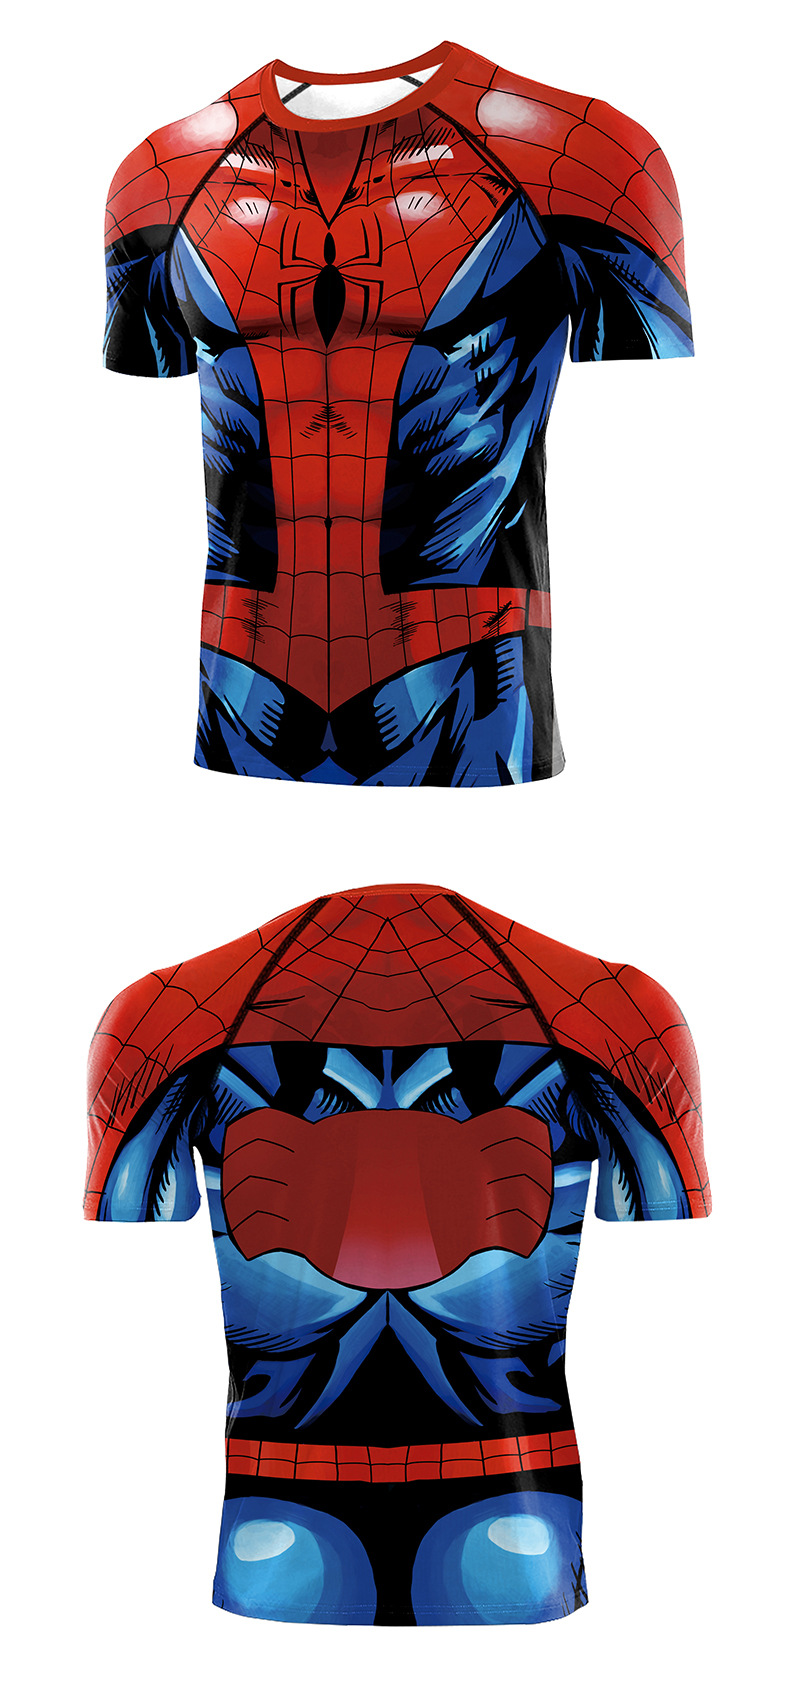 Marvel Avenger Spider Man Superhero Compression Running Shirt